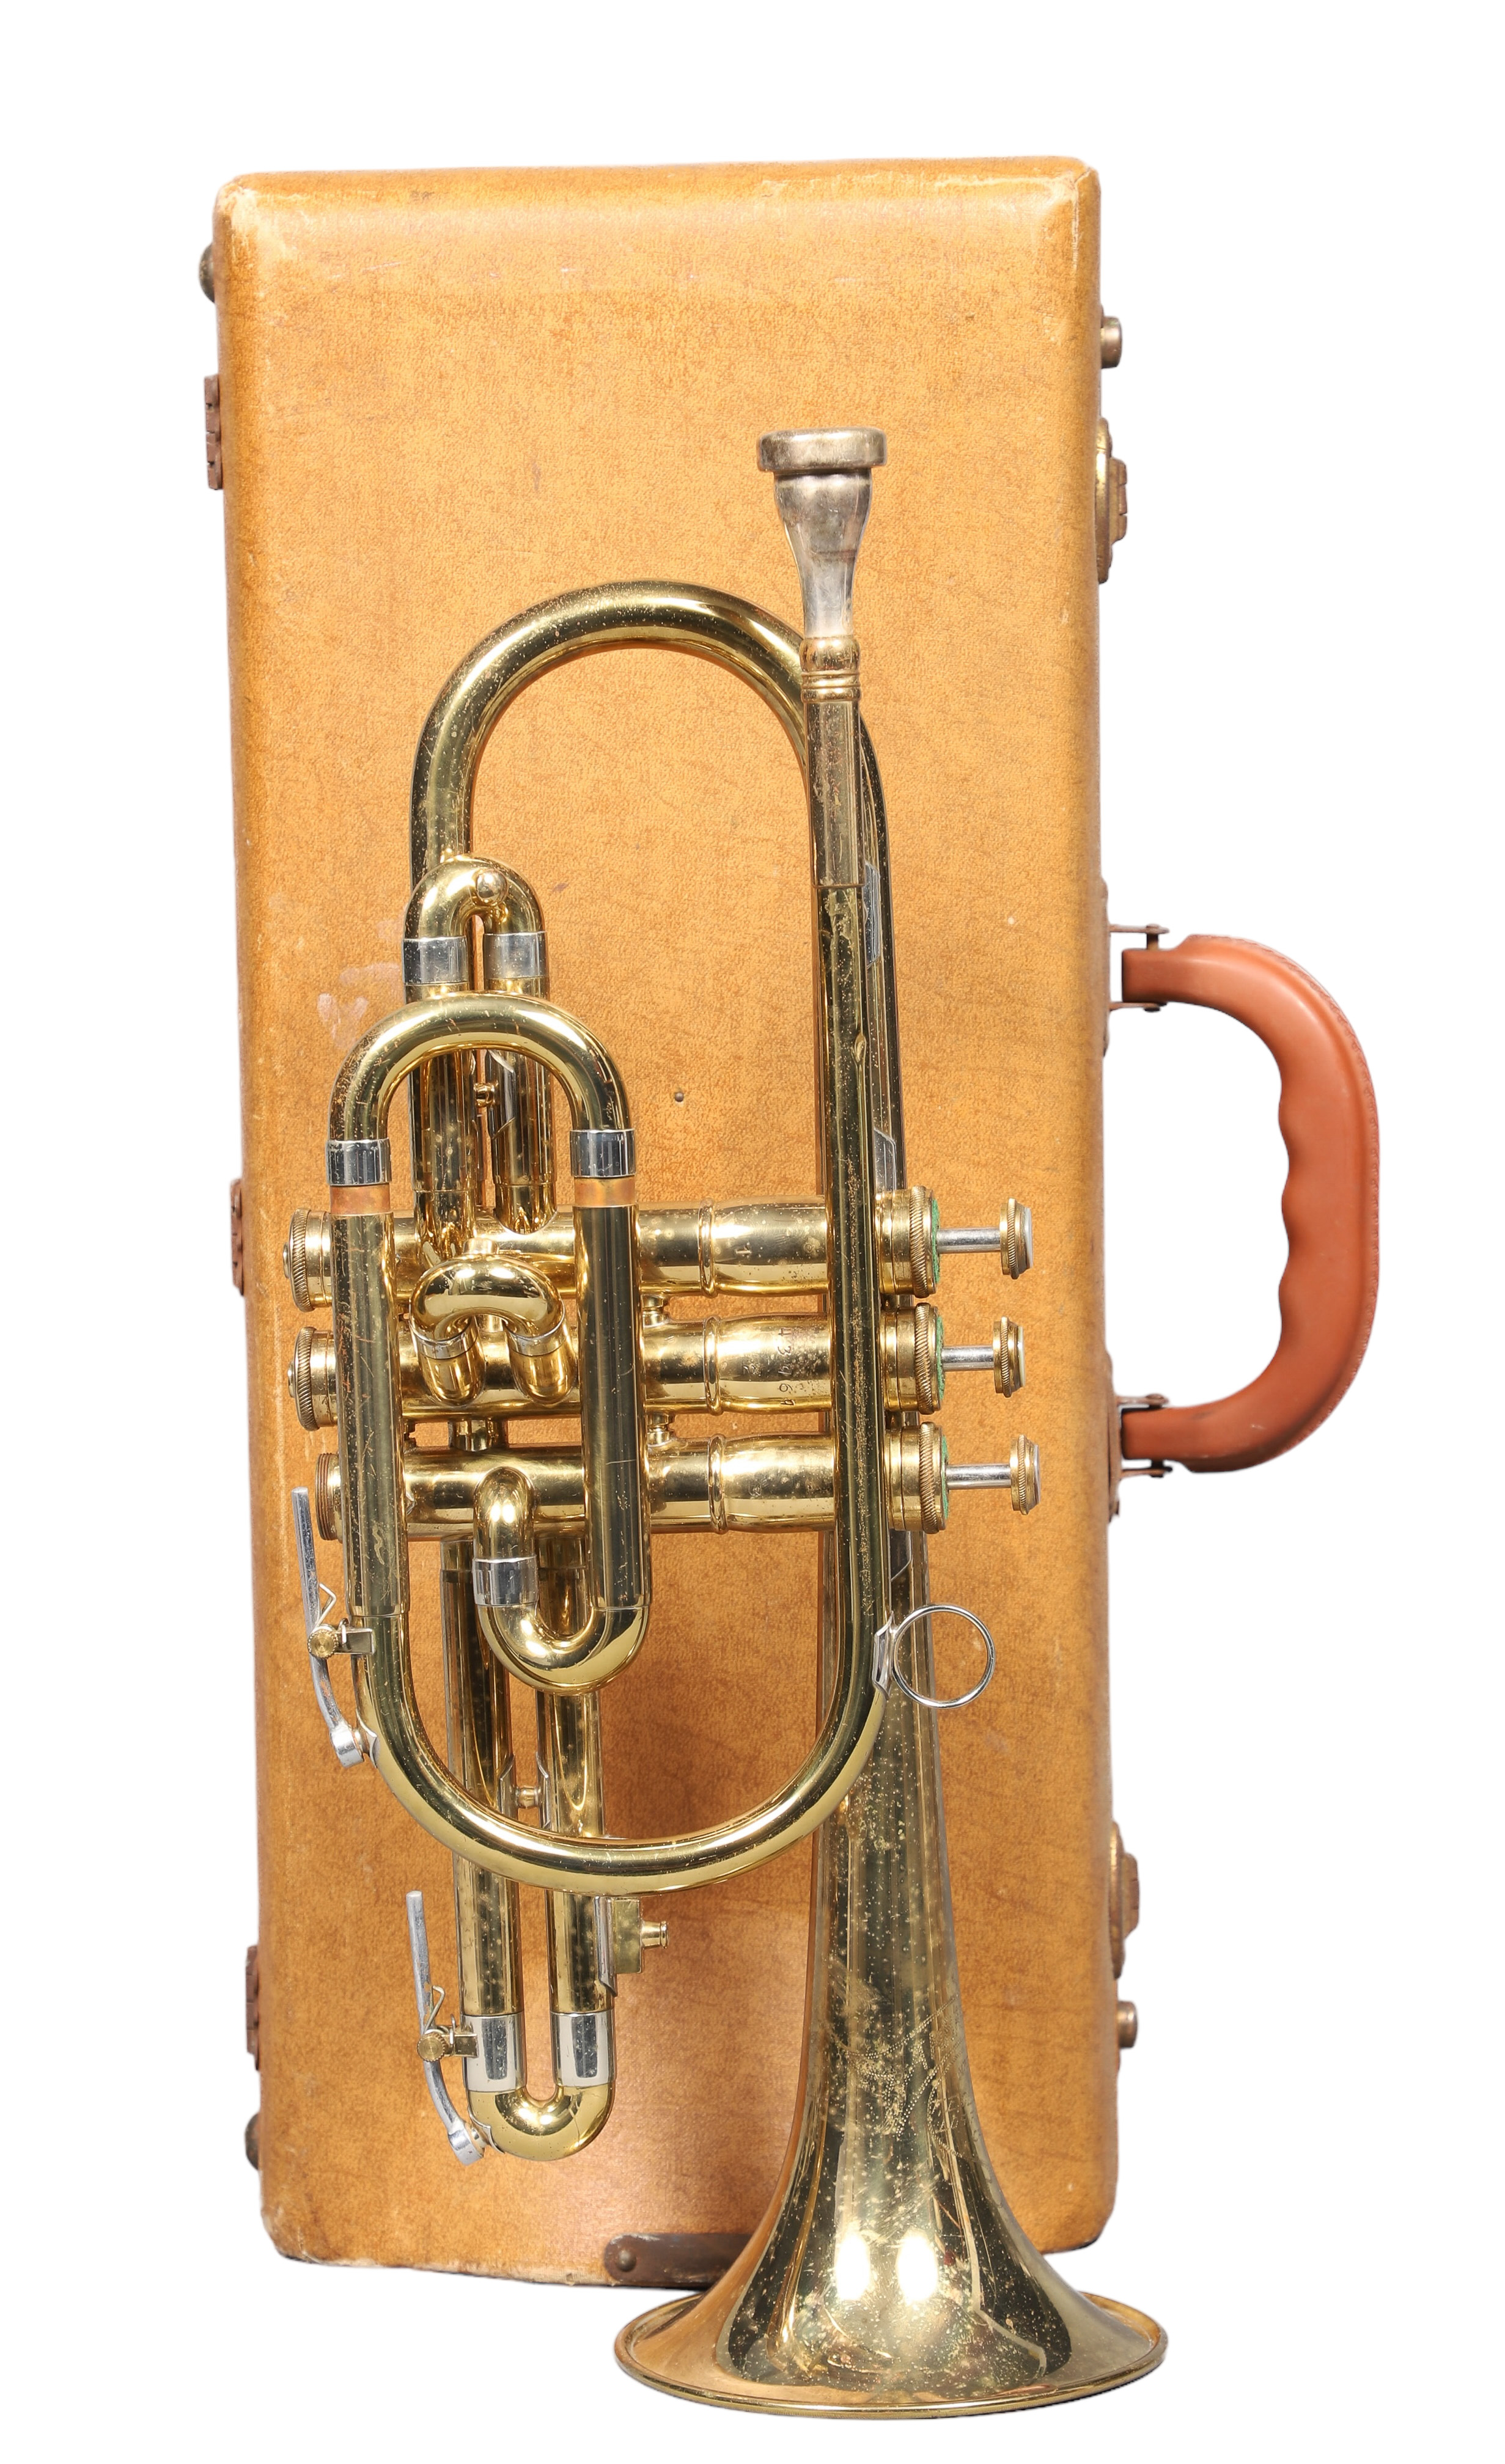 Olds Ambassador cornet trumpet  2e1eb0